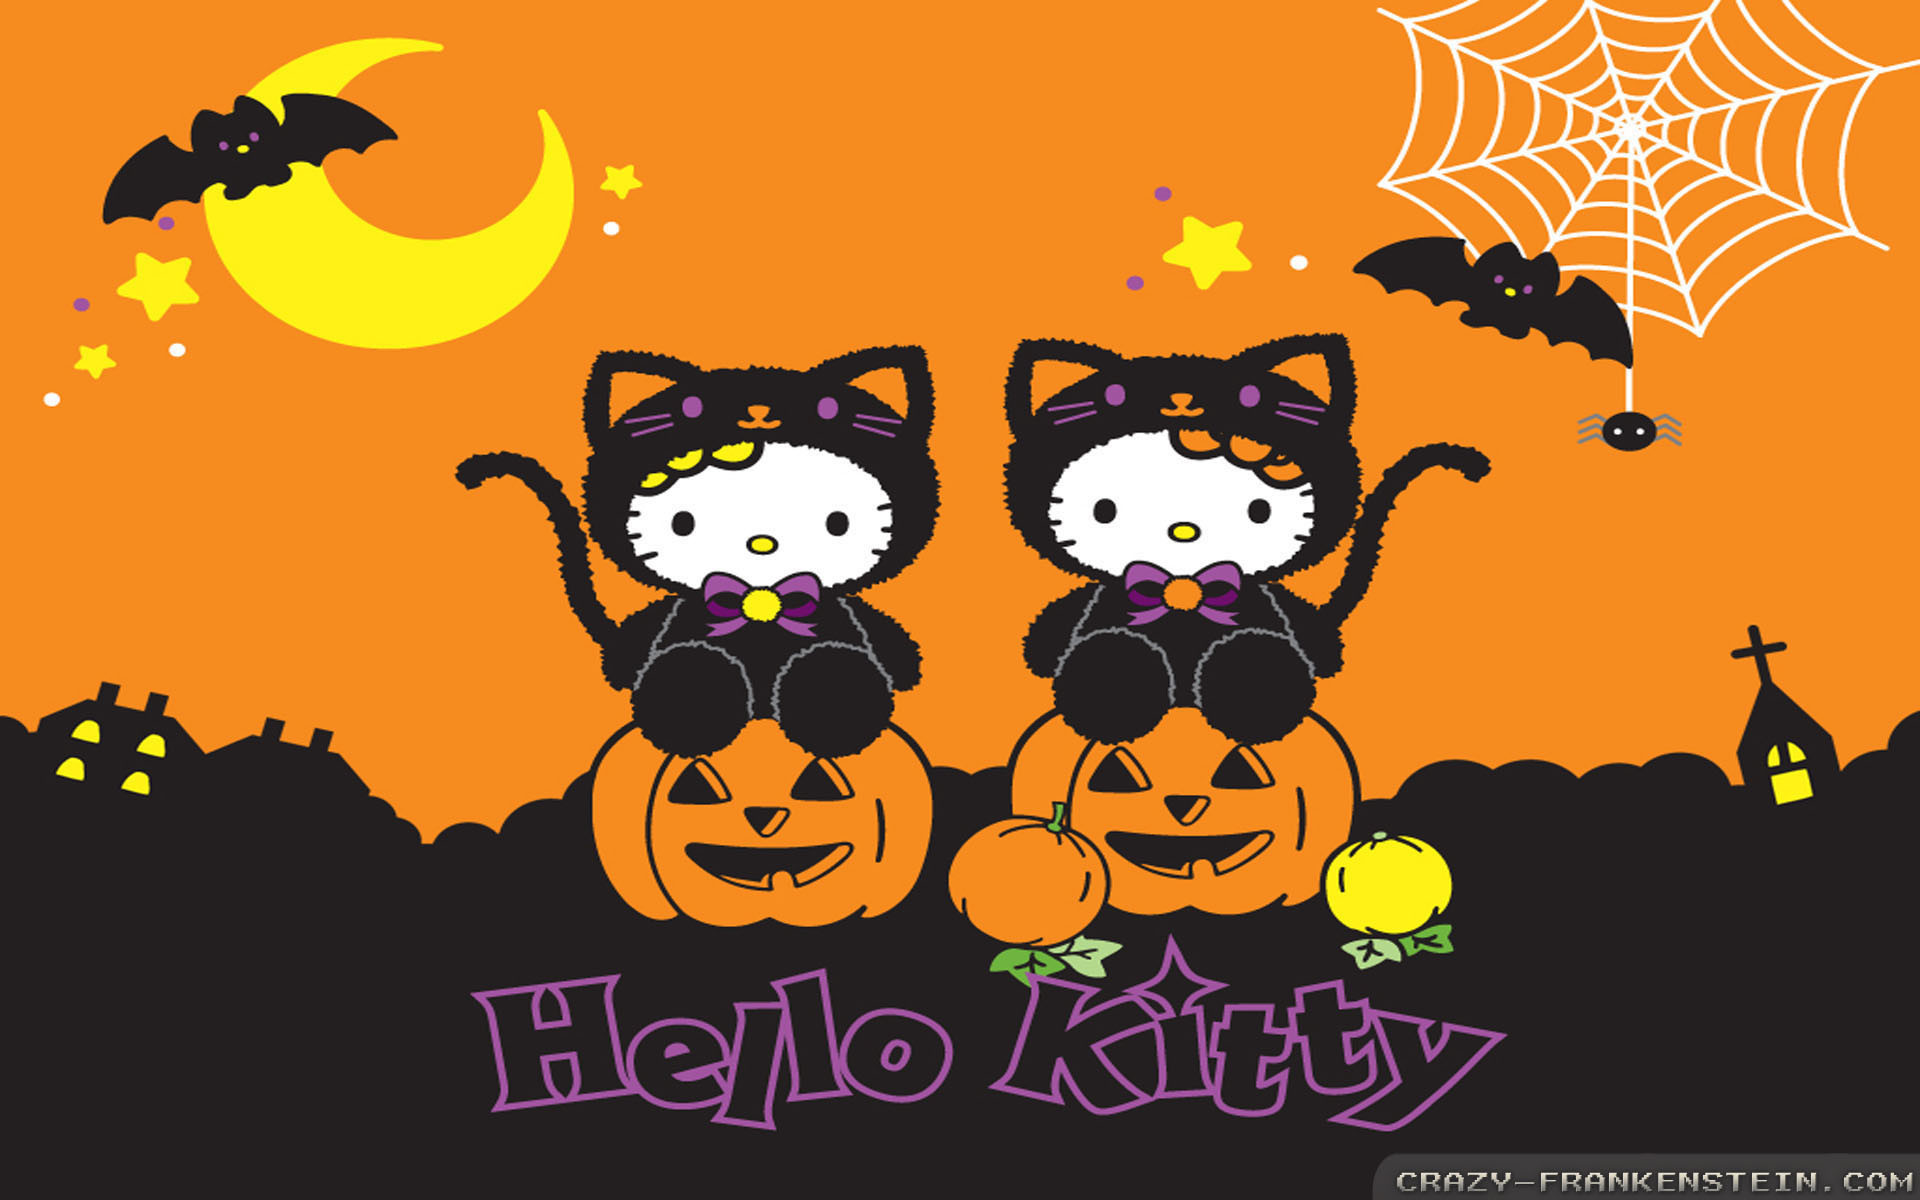 1920x1200 Wallpaper: Hello Kitty Halloween Resolution: 1024x768 | 1280x1024 |  1600x1200. Widescreen Res: 1440x900 | 1680x1050 | 